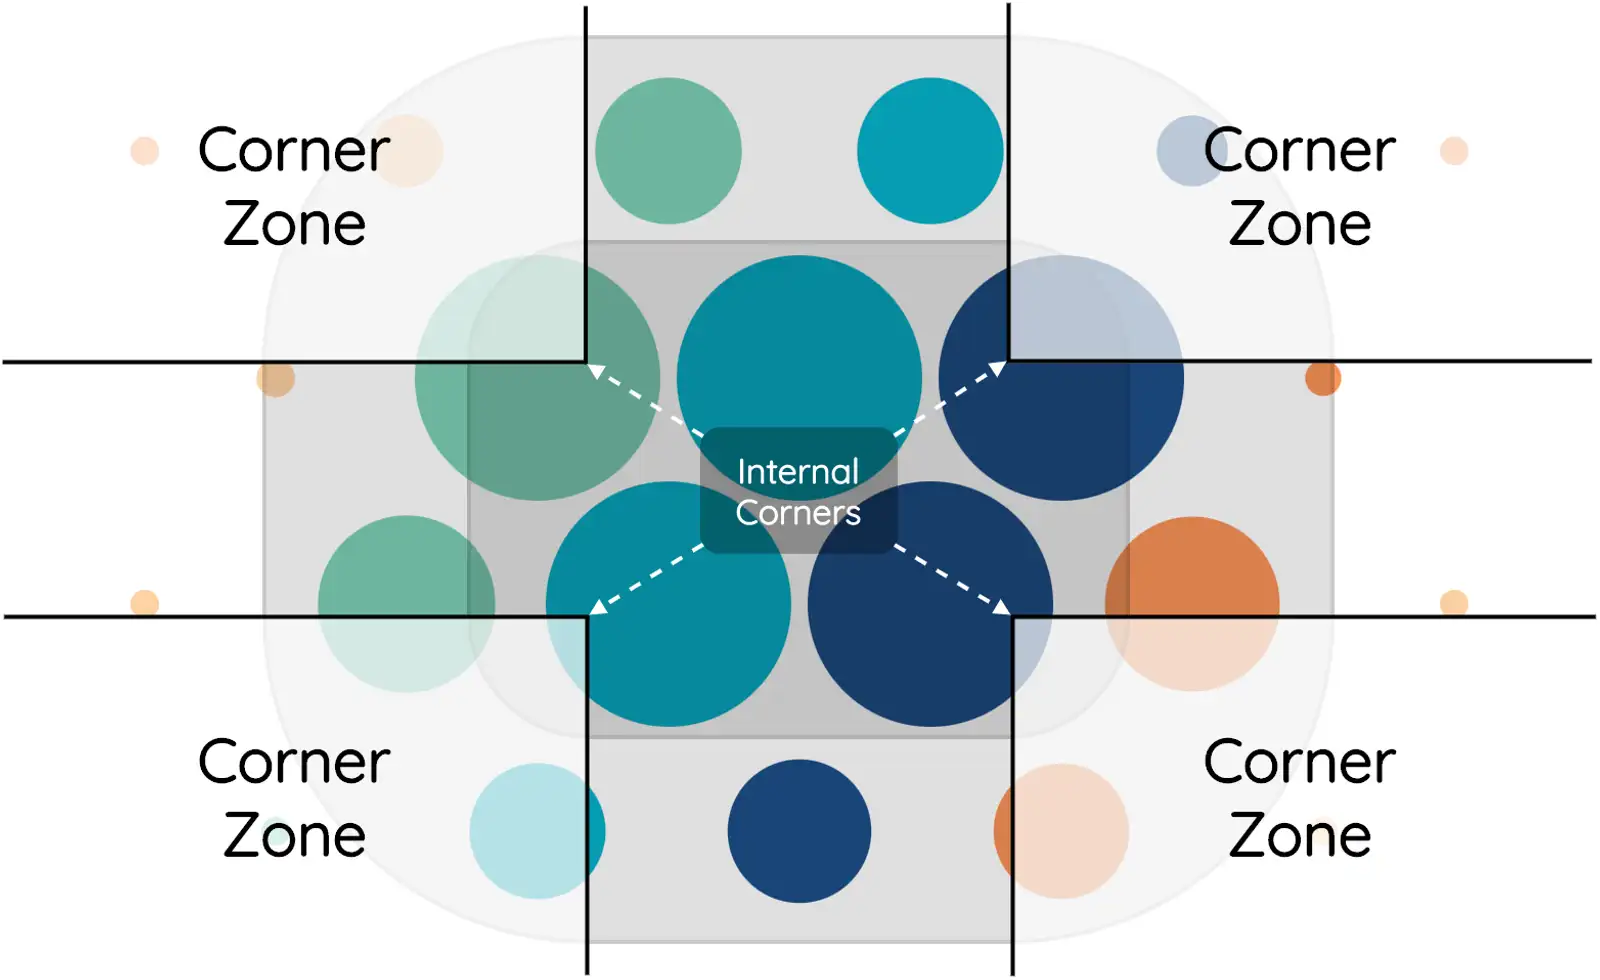 Corner Zones visualized over the graphic Bubble UI model